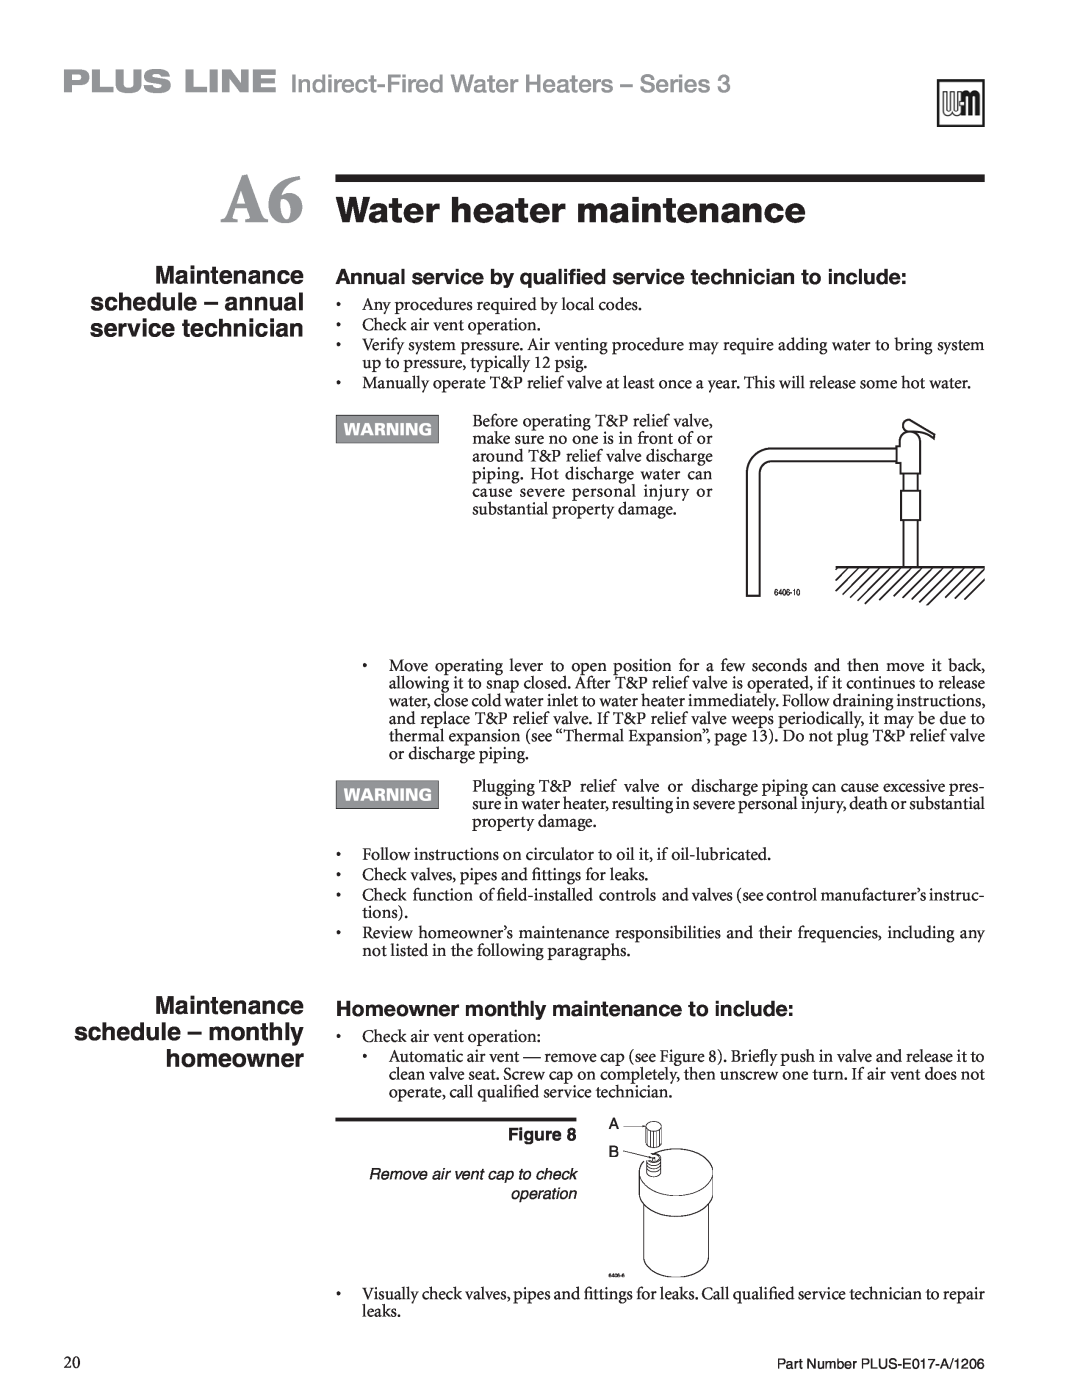 Weil-McLain PLUS-E017-A/1206 manual A6 Water heater maintenance, Maintenance schedule - annual service technician 